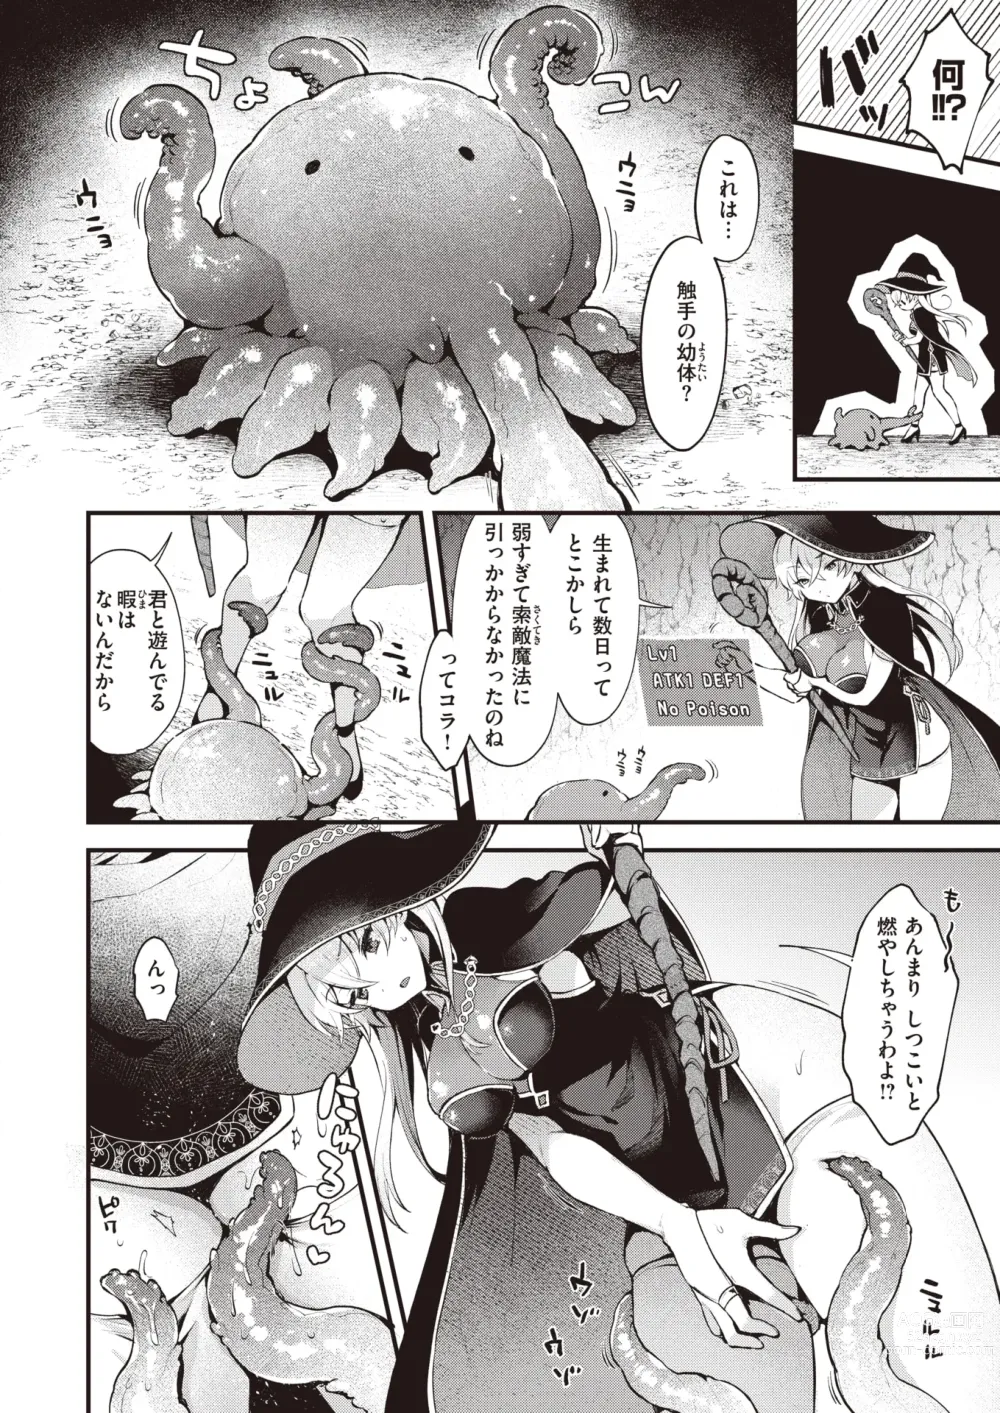 Page 7 of manga Isekai Rakuten Vol. 25